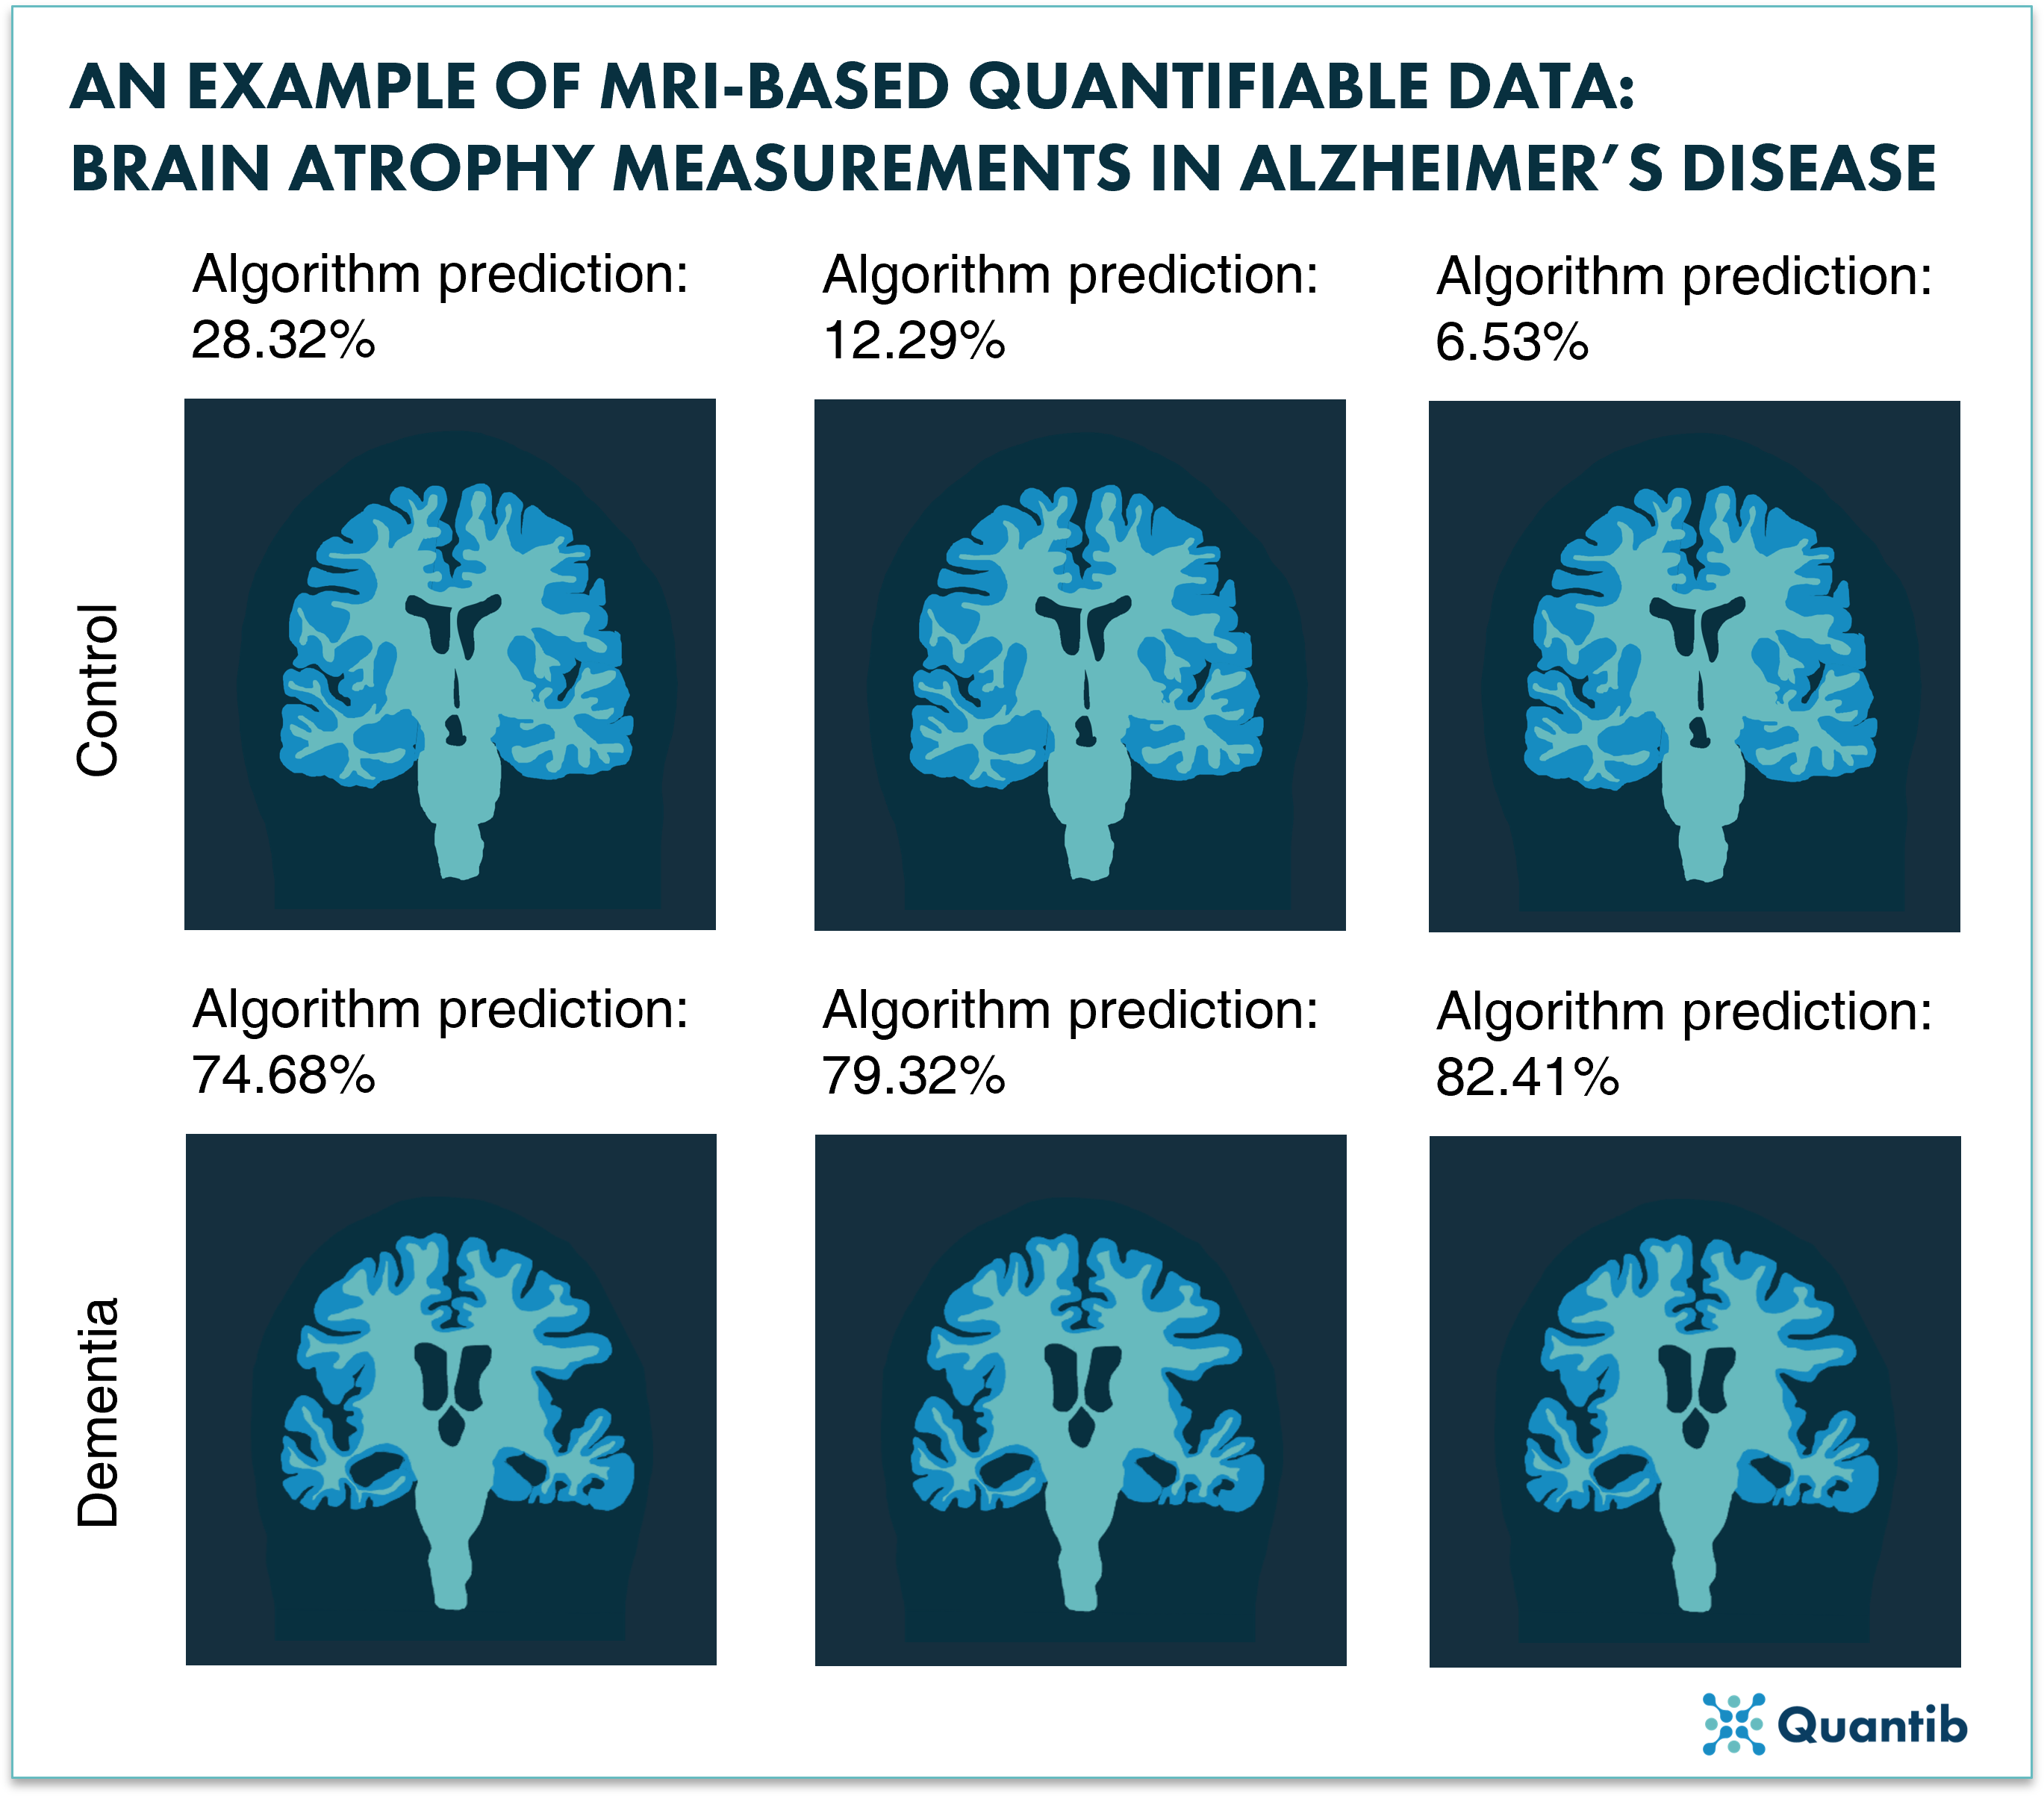 Brain atrophy measurements in Alzheimer's disease